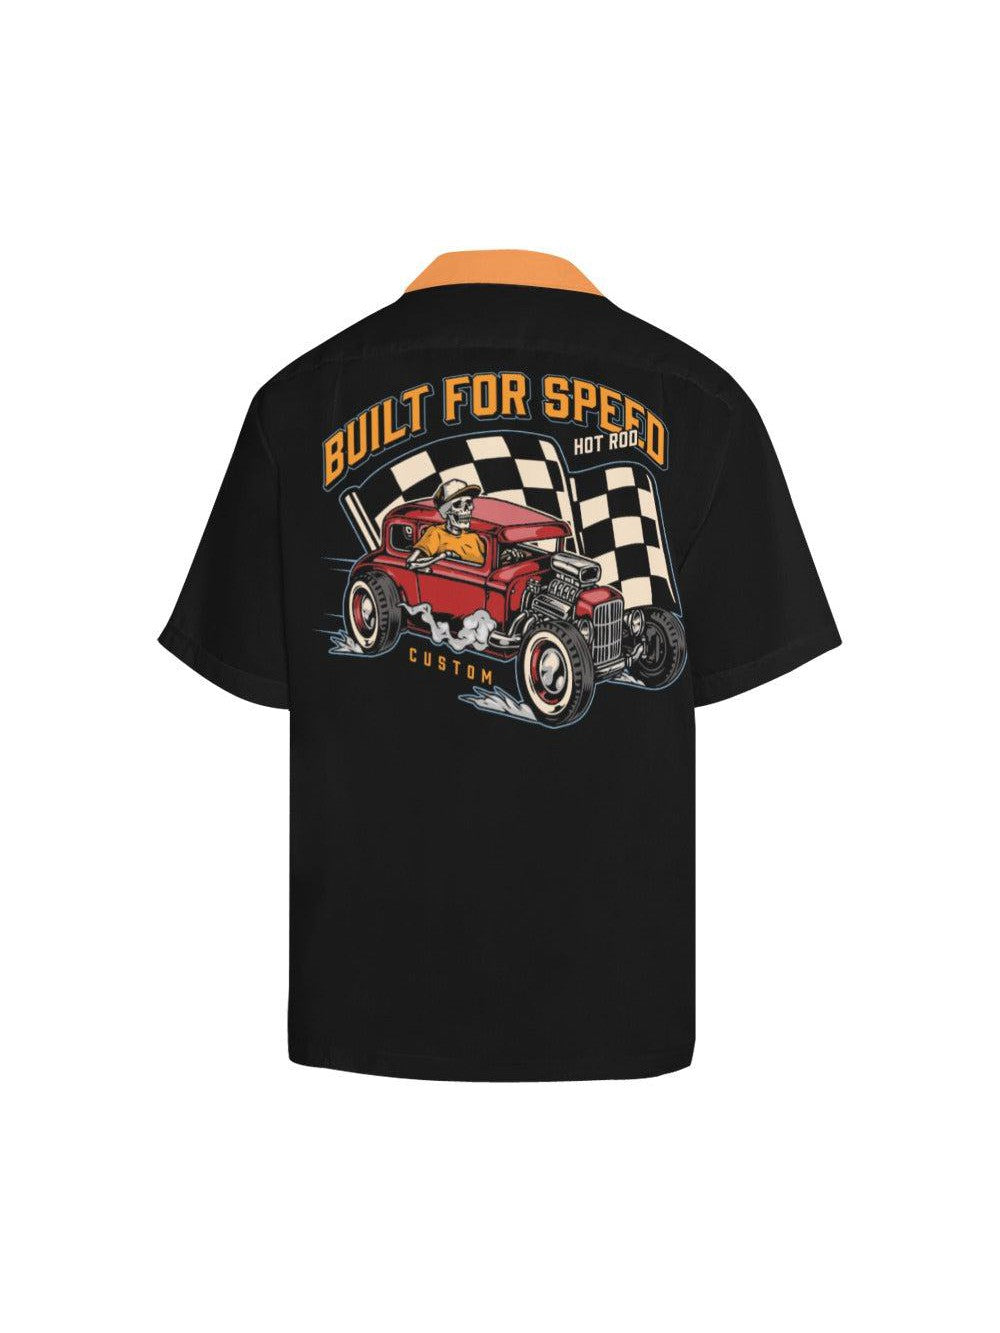 Built for Speed Men's Rockabilly Hotrod Shirt